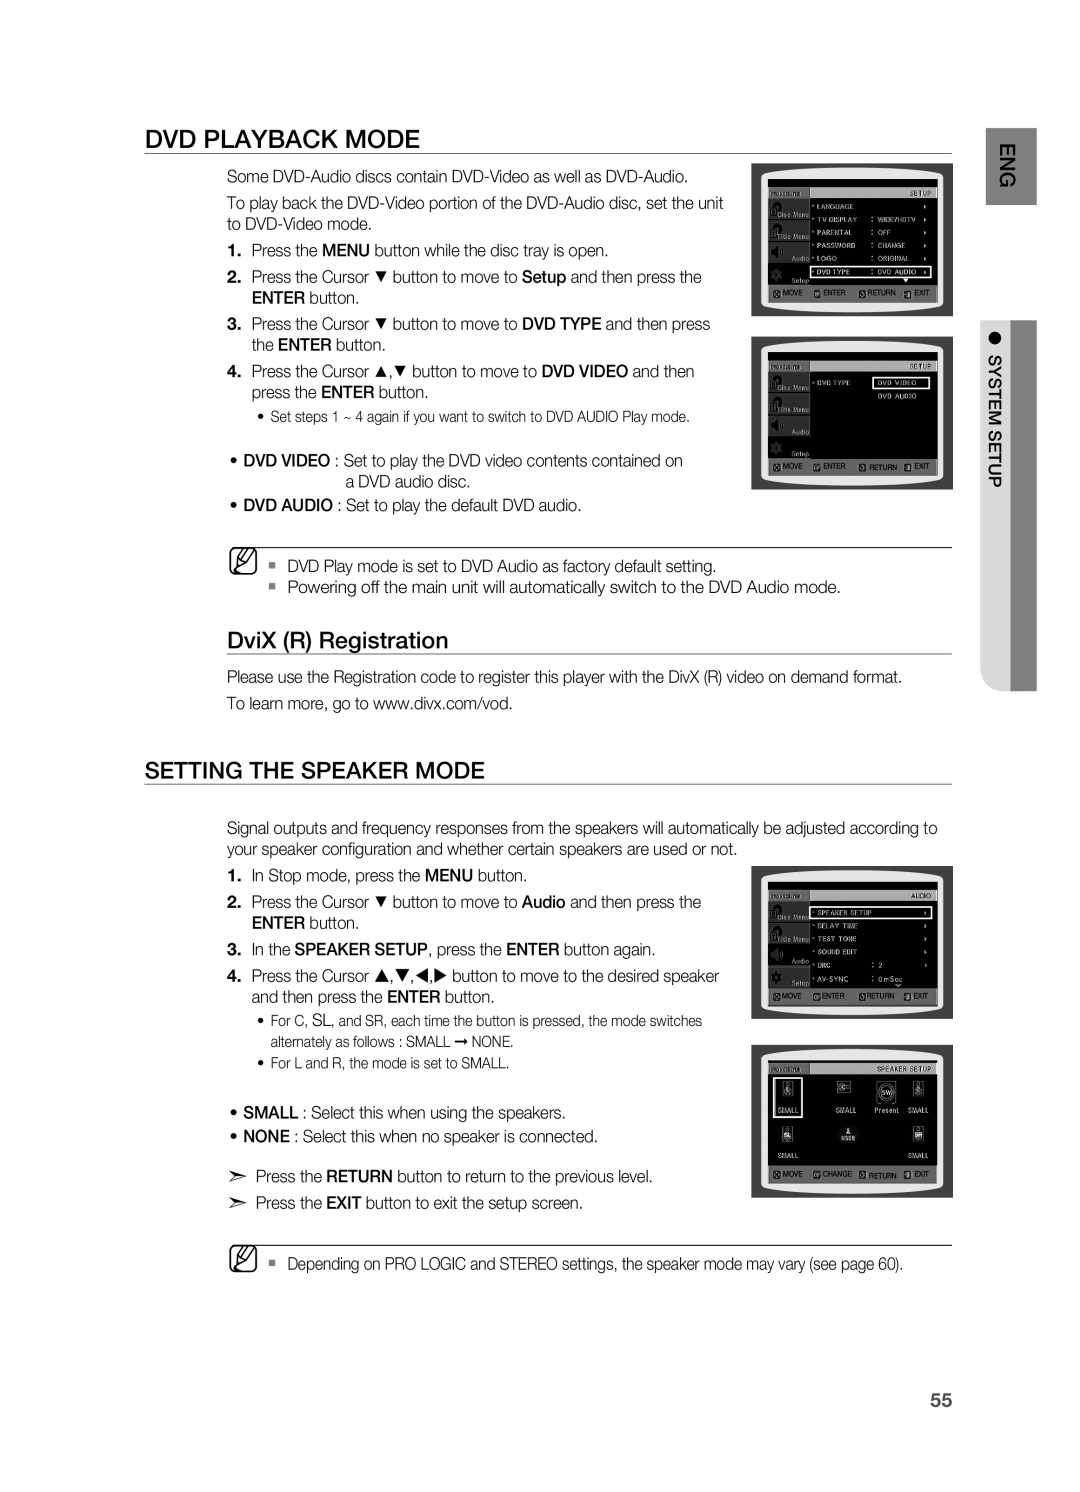 Samsung HT-TZ312 manual DVD Playback Mode, DviX R Registration, Setting the Speaker Mode 